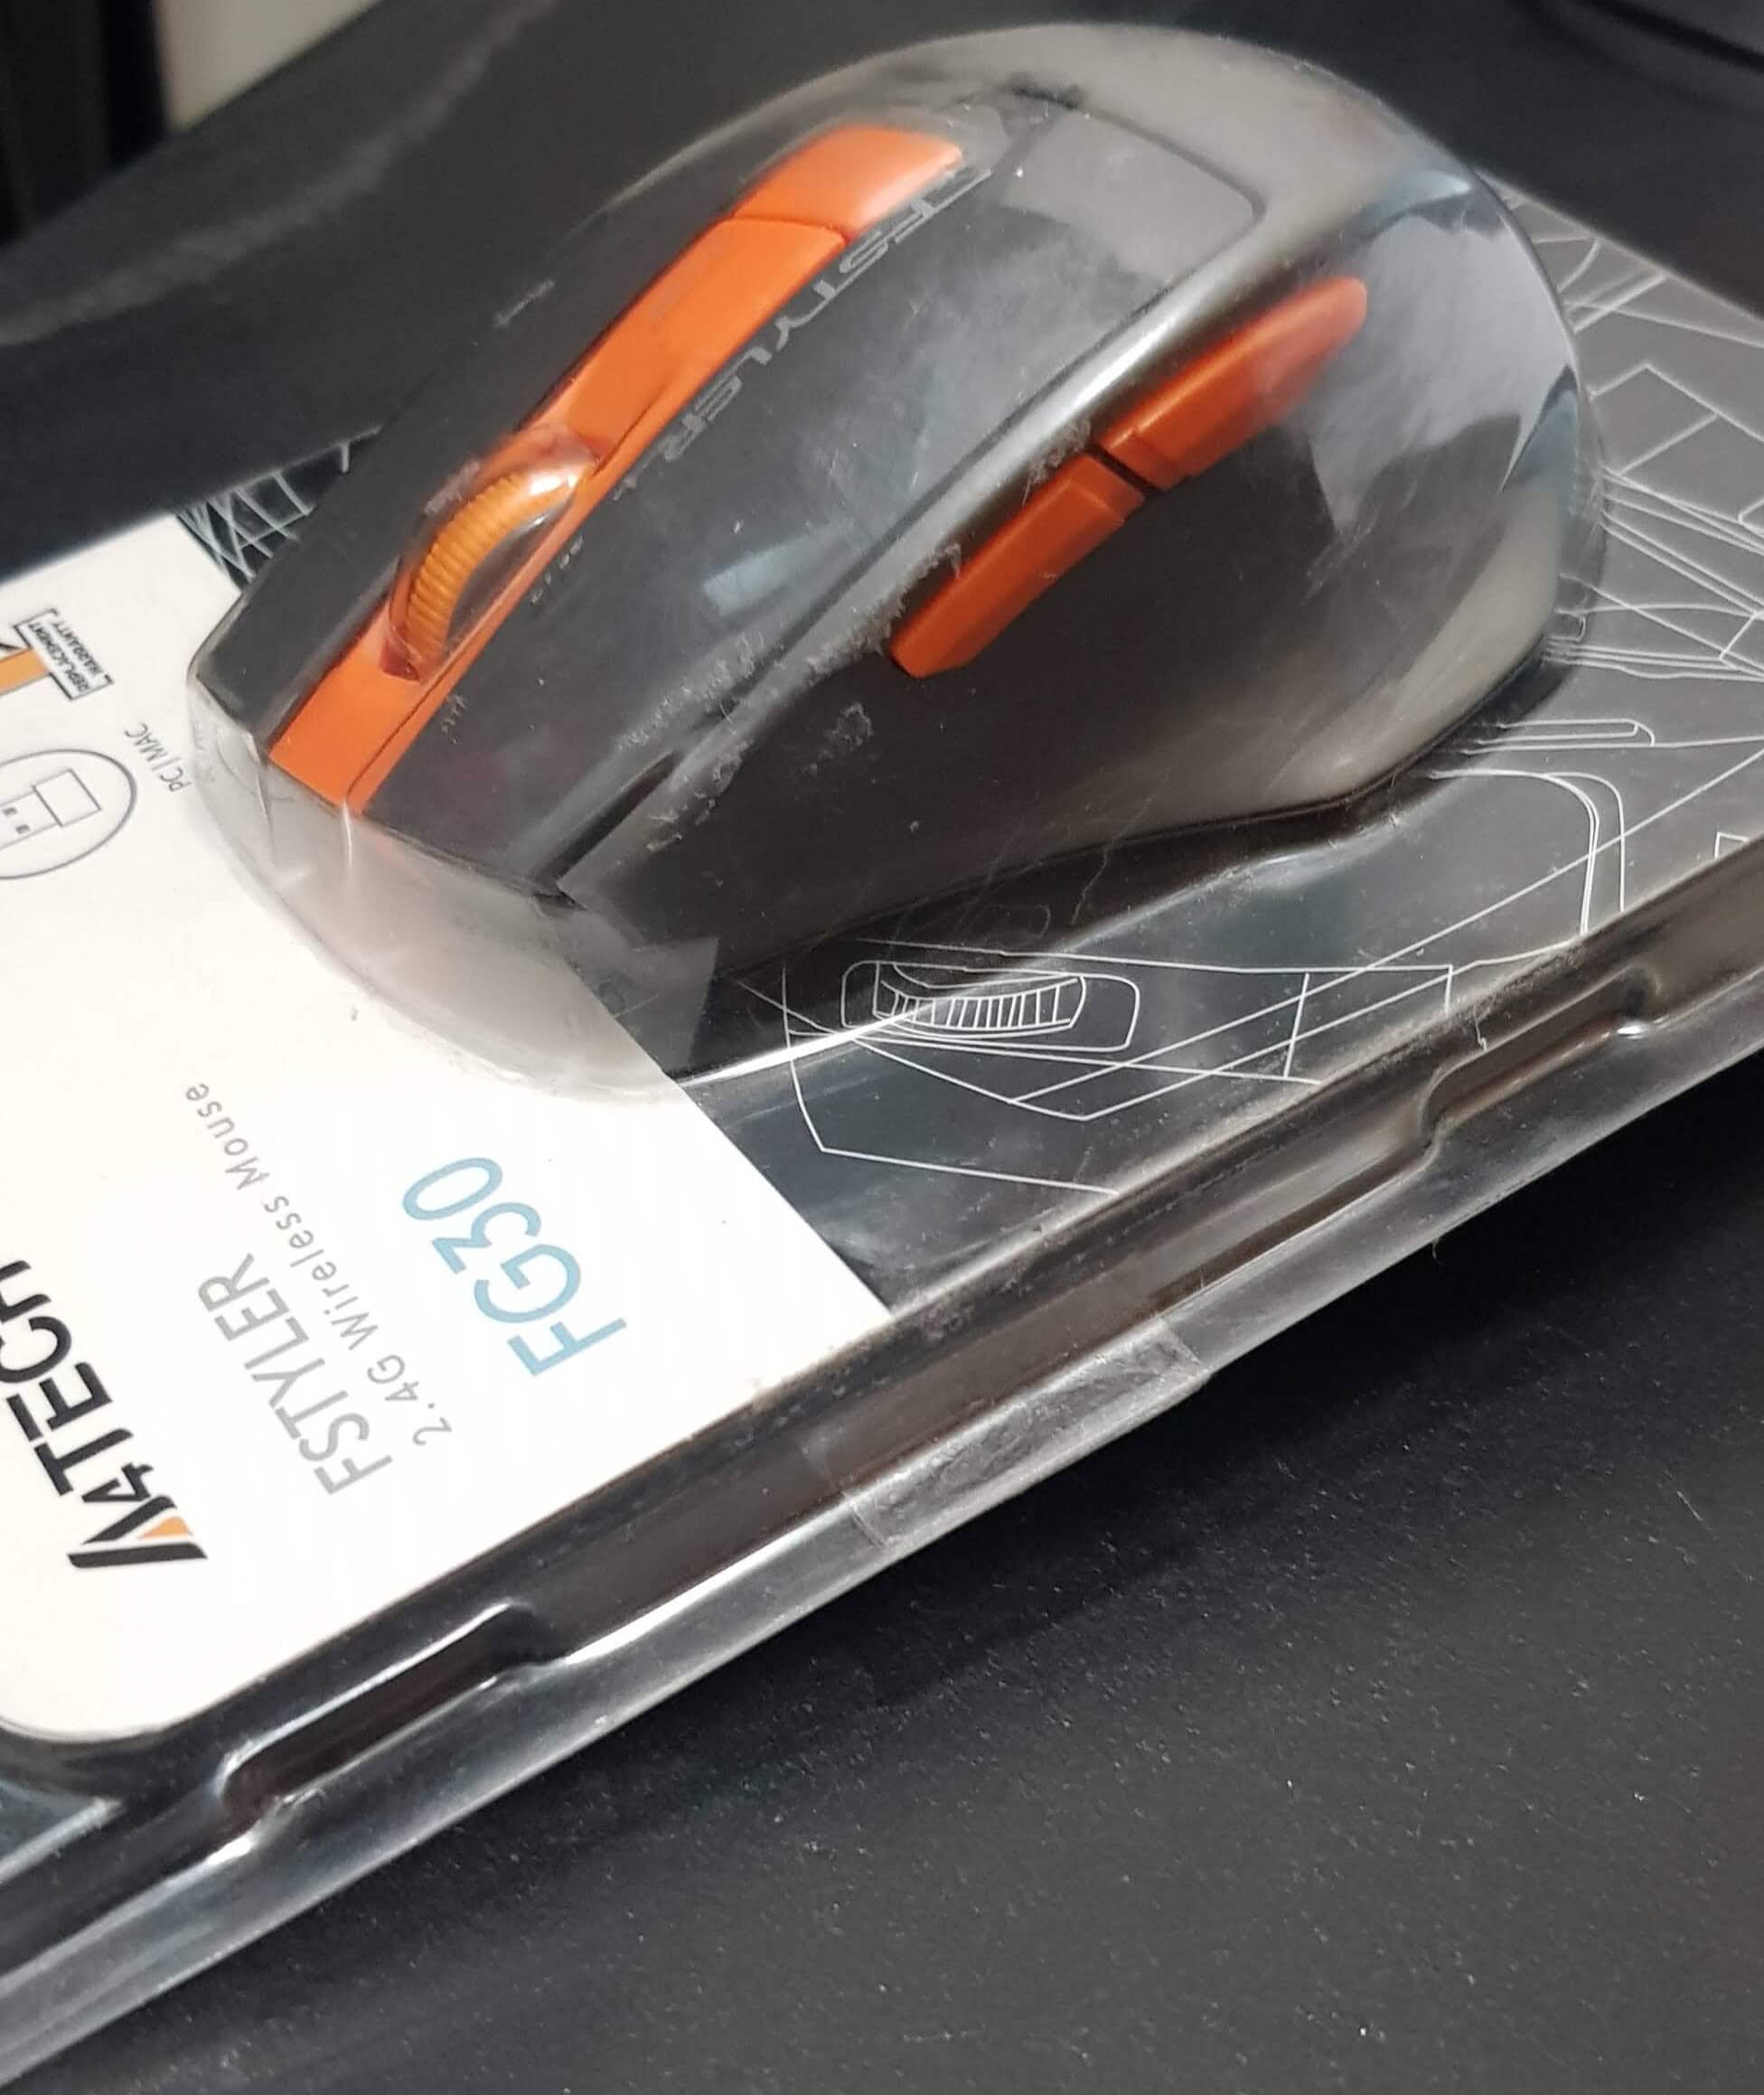 Original A4tech FG30 Wireless Mouse - orange